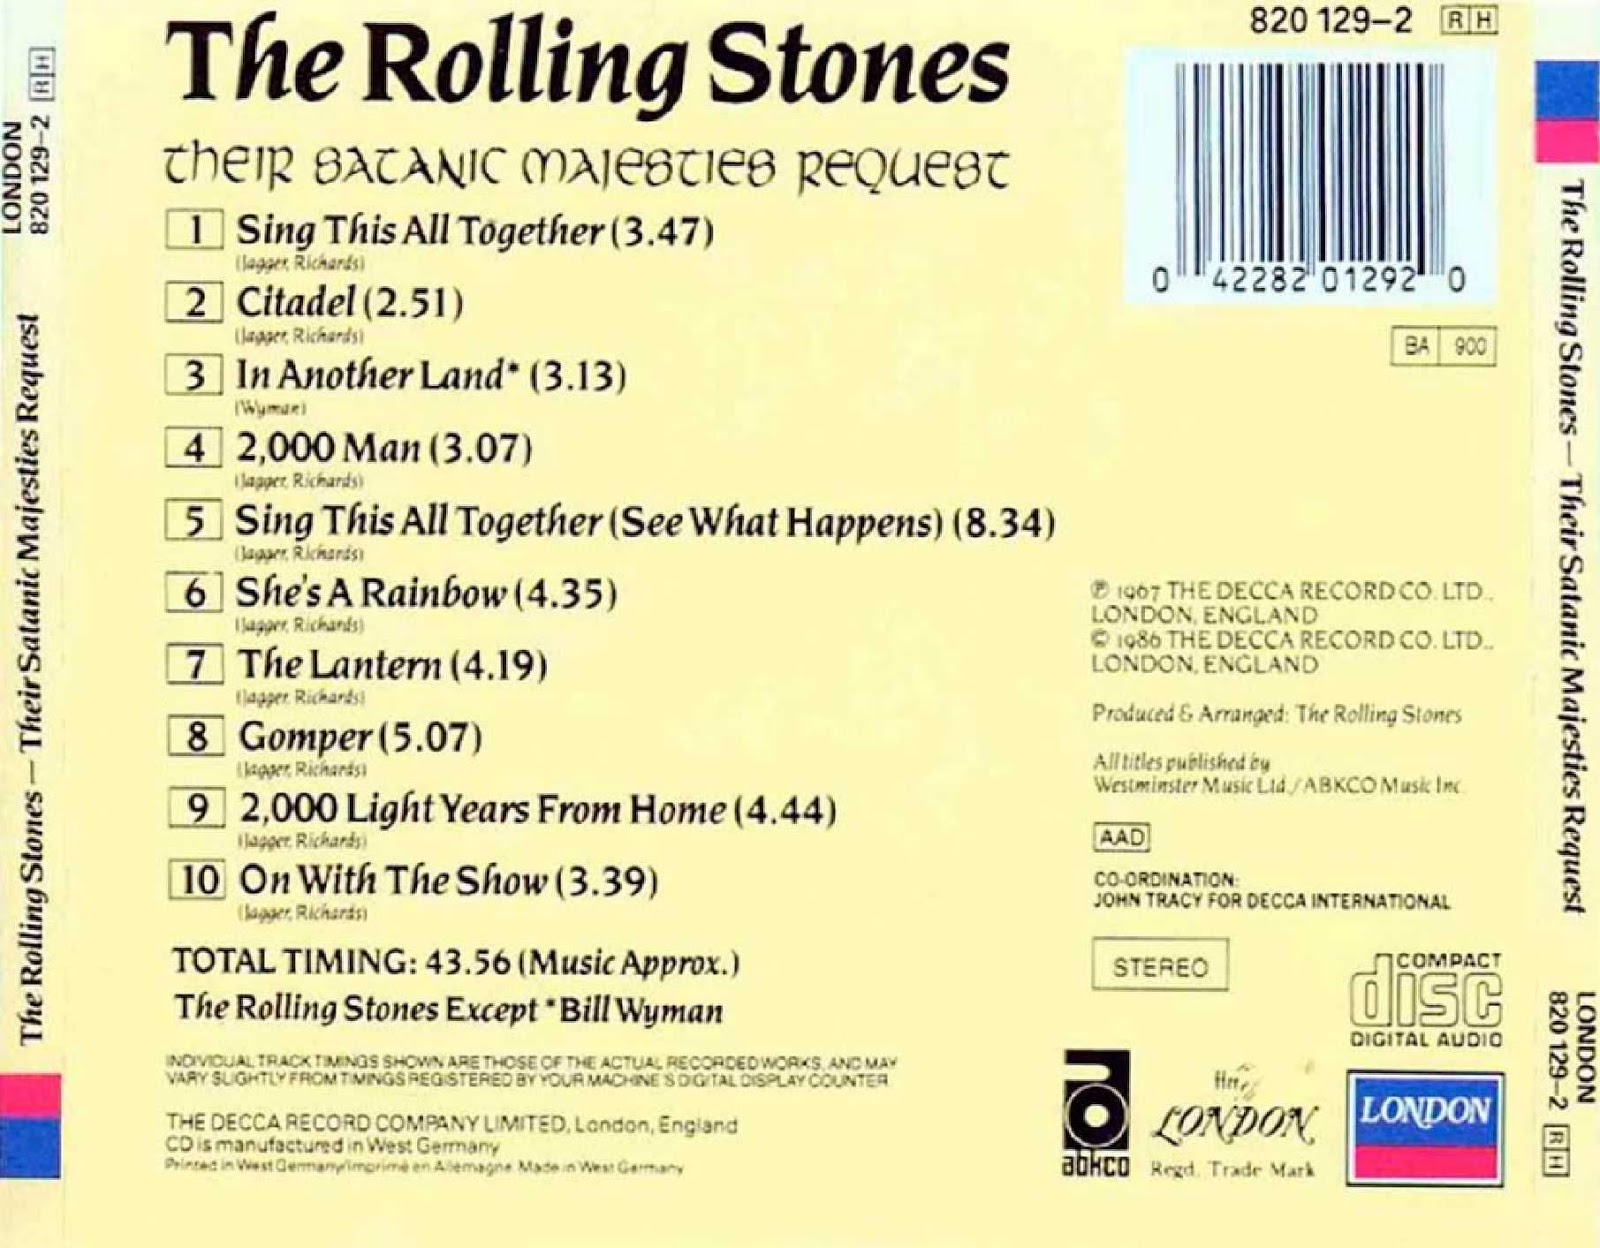 Their stones. The Rolling Stones their Satanic Majesties request 1967. 1967 - Their Satanic Majesties request. Роллинг стоунз их сатанинские Величества. Their Satanic Majesties request.